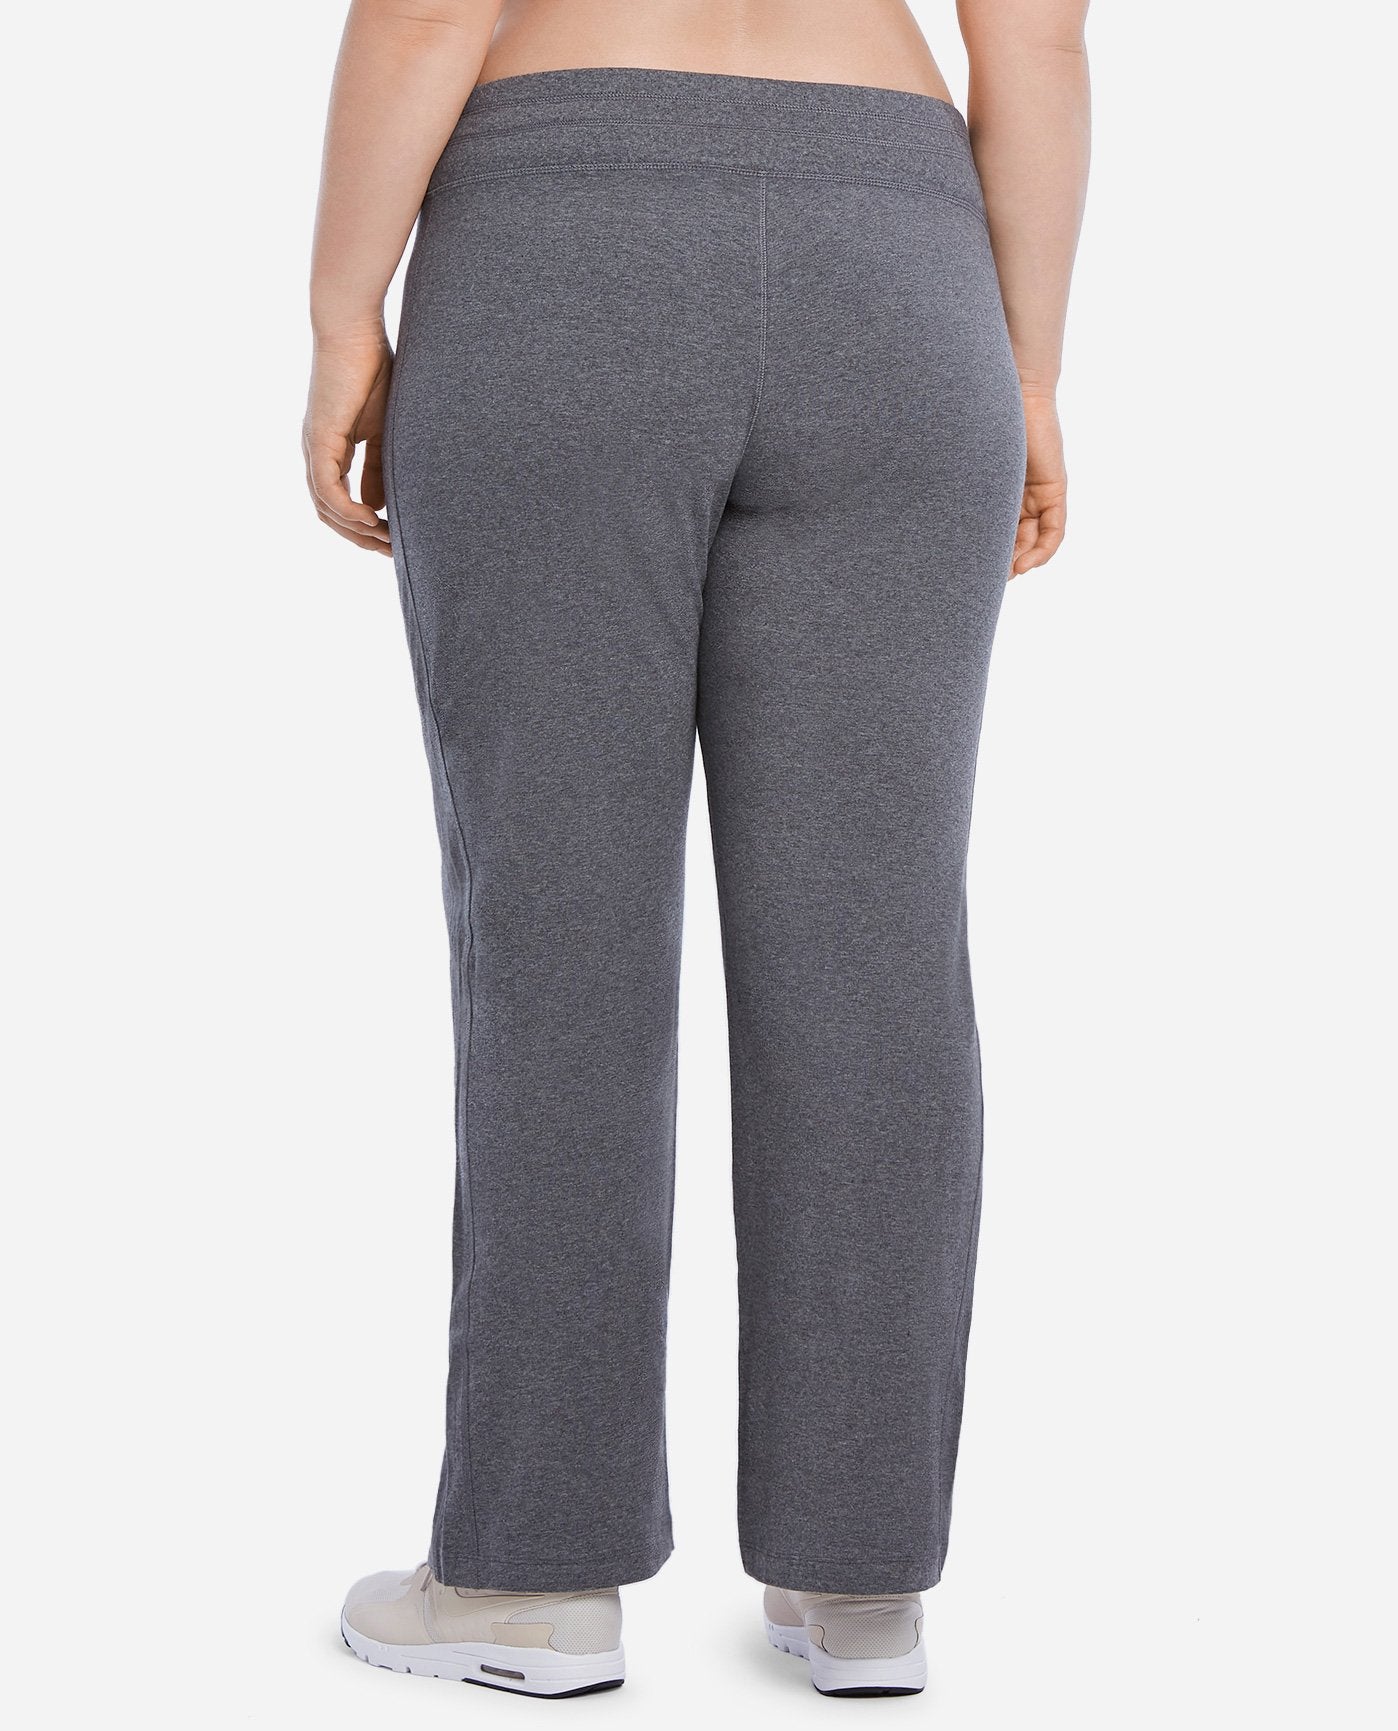 Danskin Now - Relaxed Sweatpants - Size XL - AAA Polymer